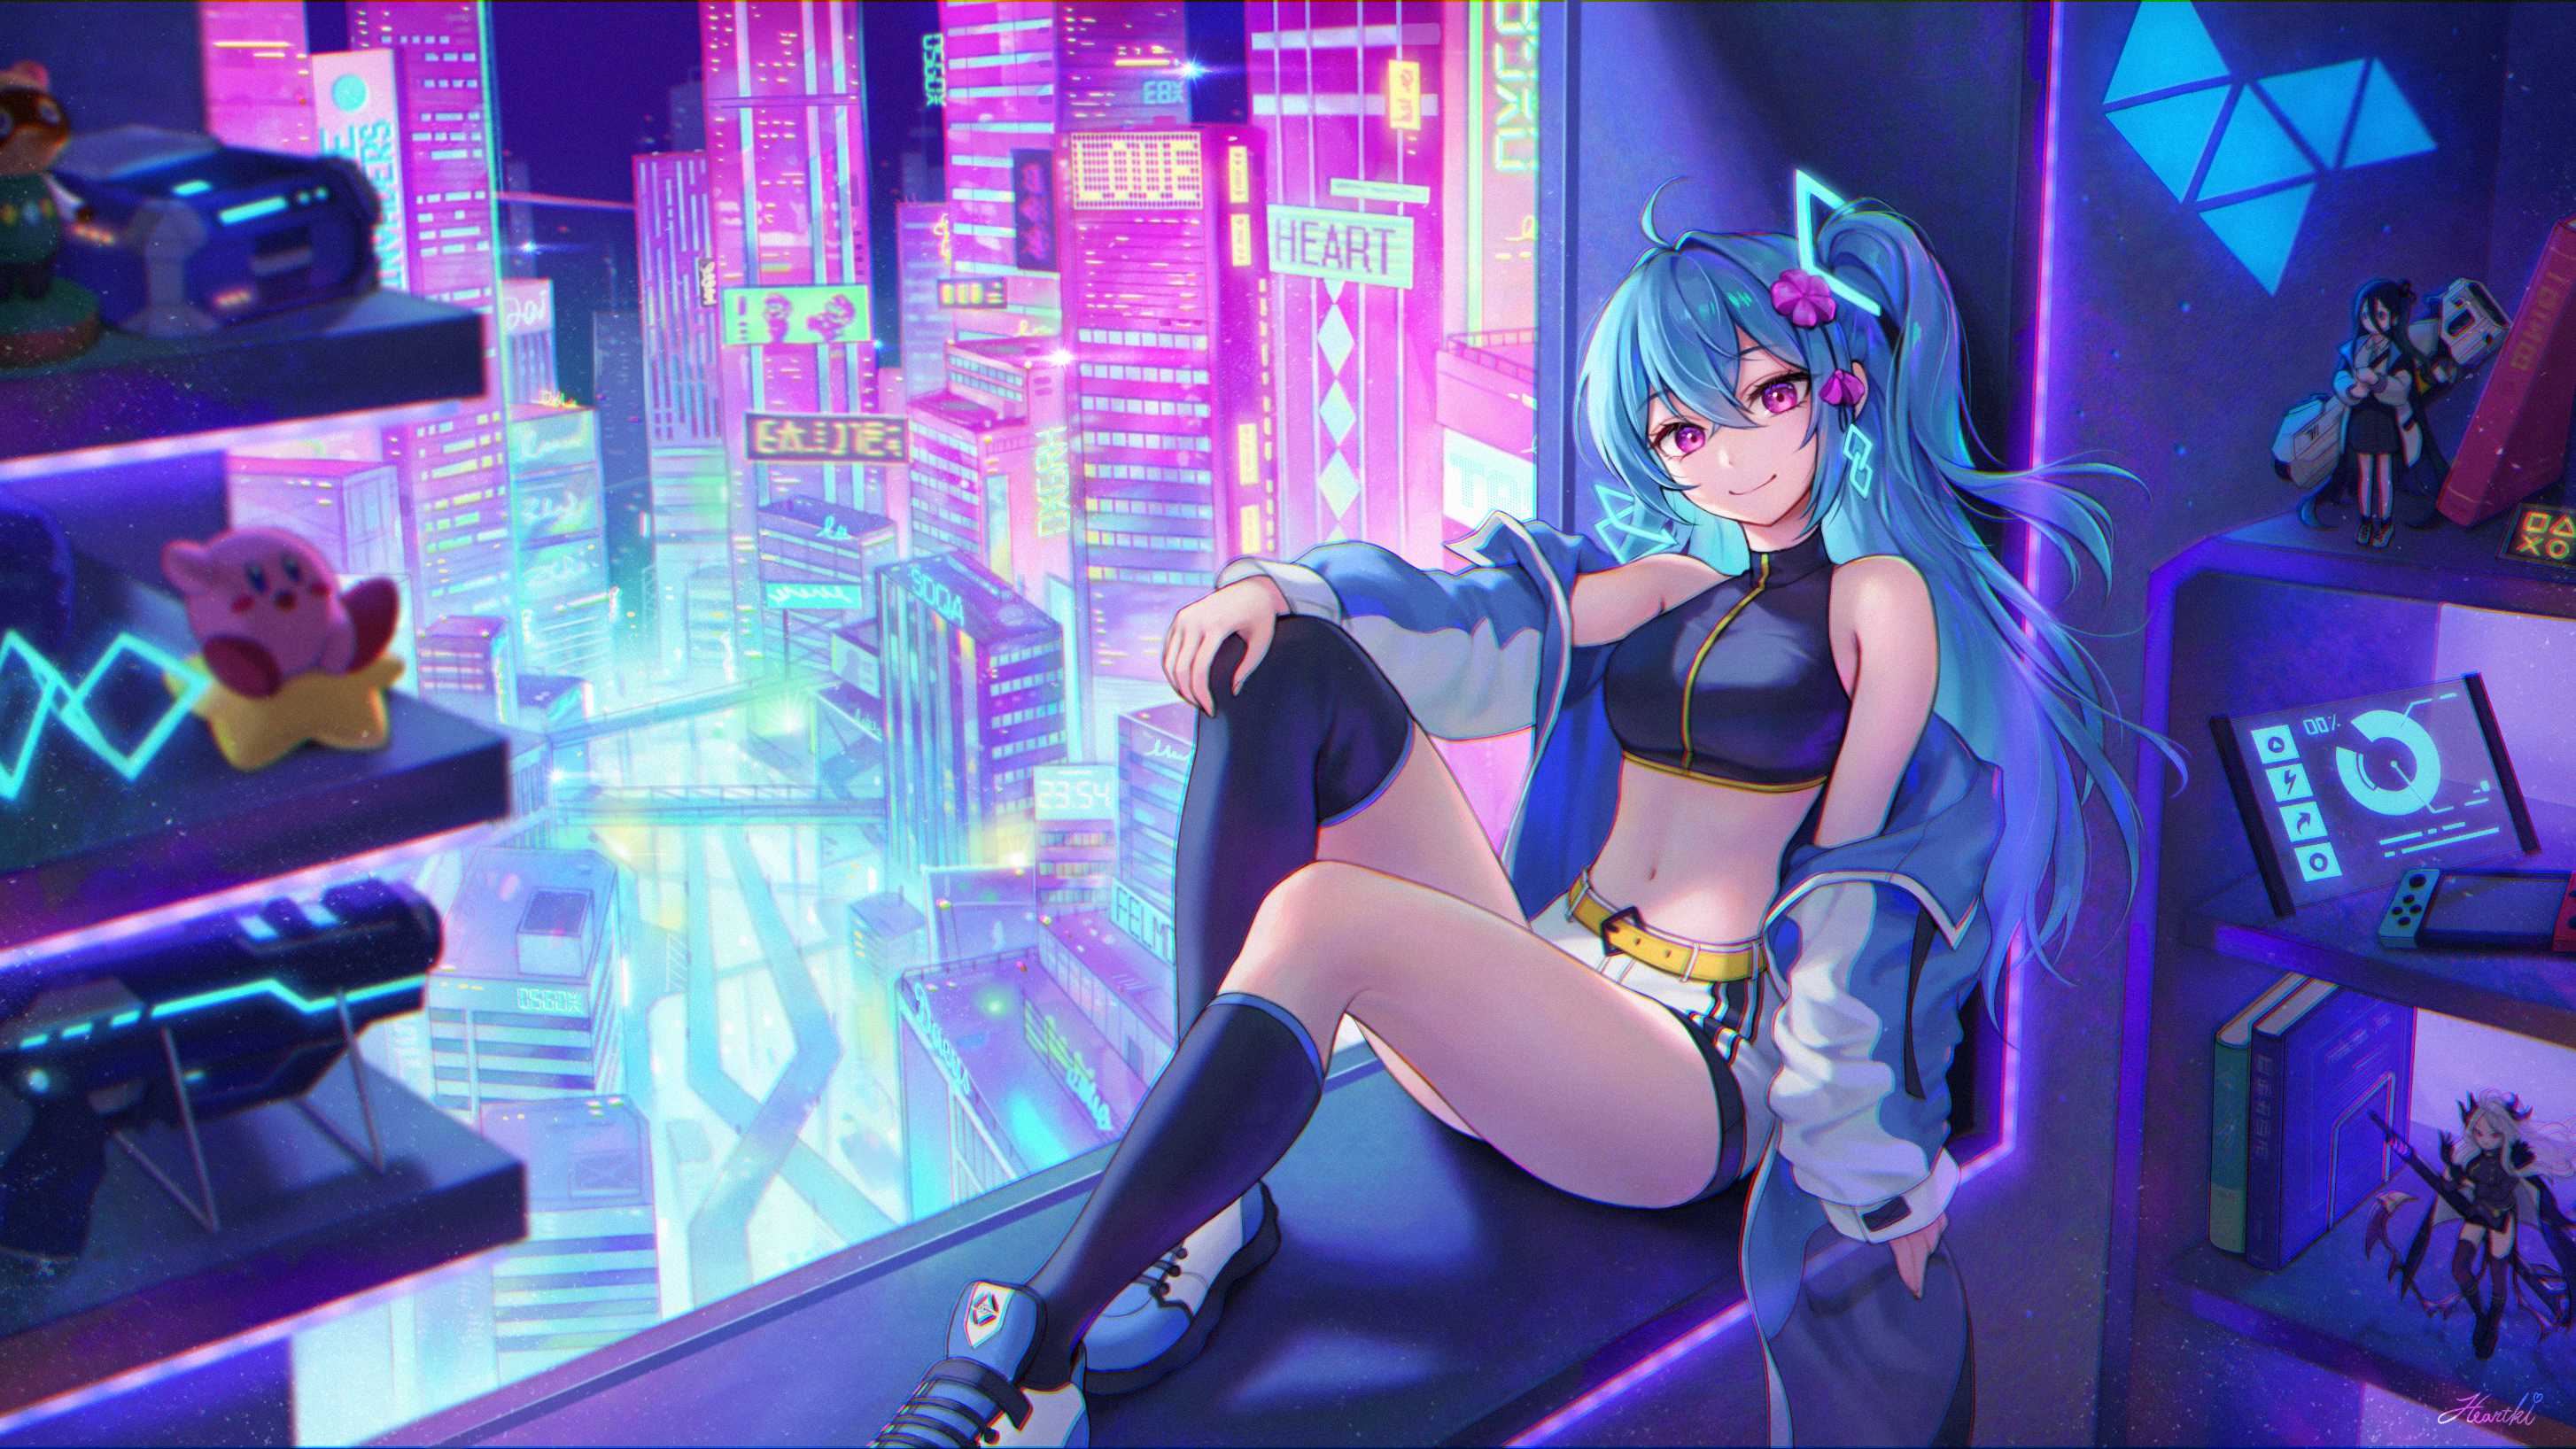 Anime Anime Girls Blue Hair Shorts City Cyberpunk Purple Eyes Cityscape 2908x1636